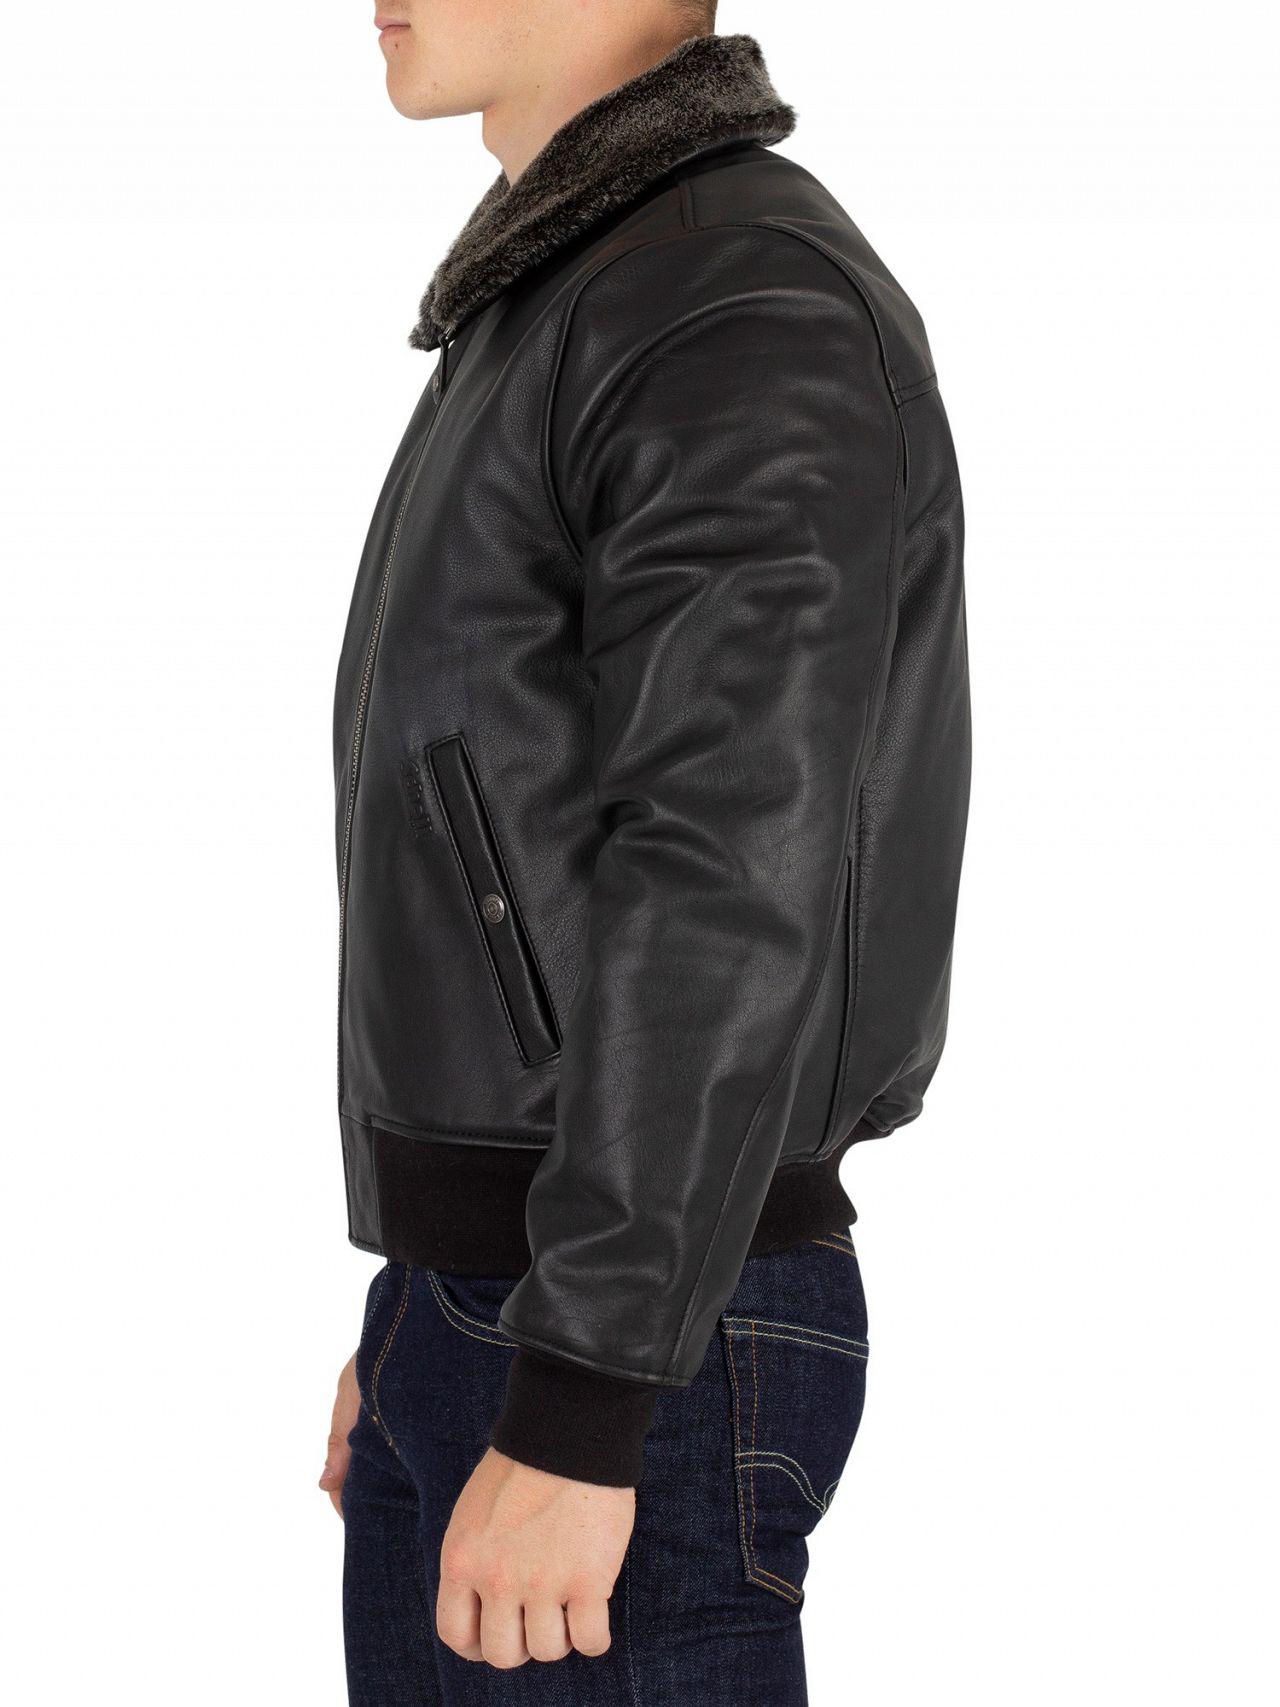 Schott Nyc Black Fur Collar Leather Jacket for Men - Lyst